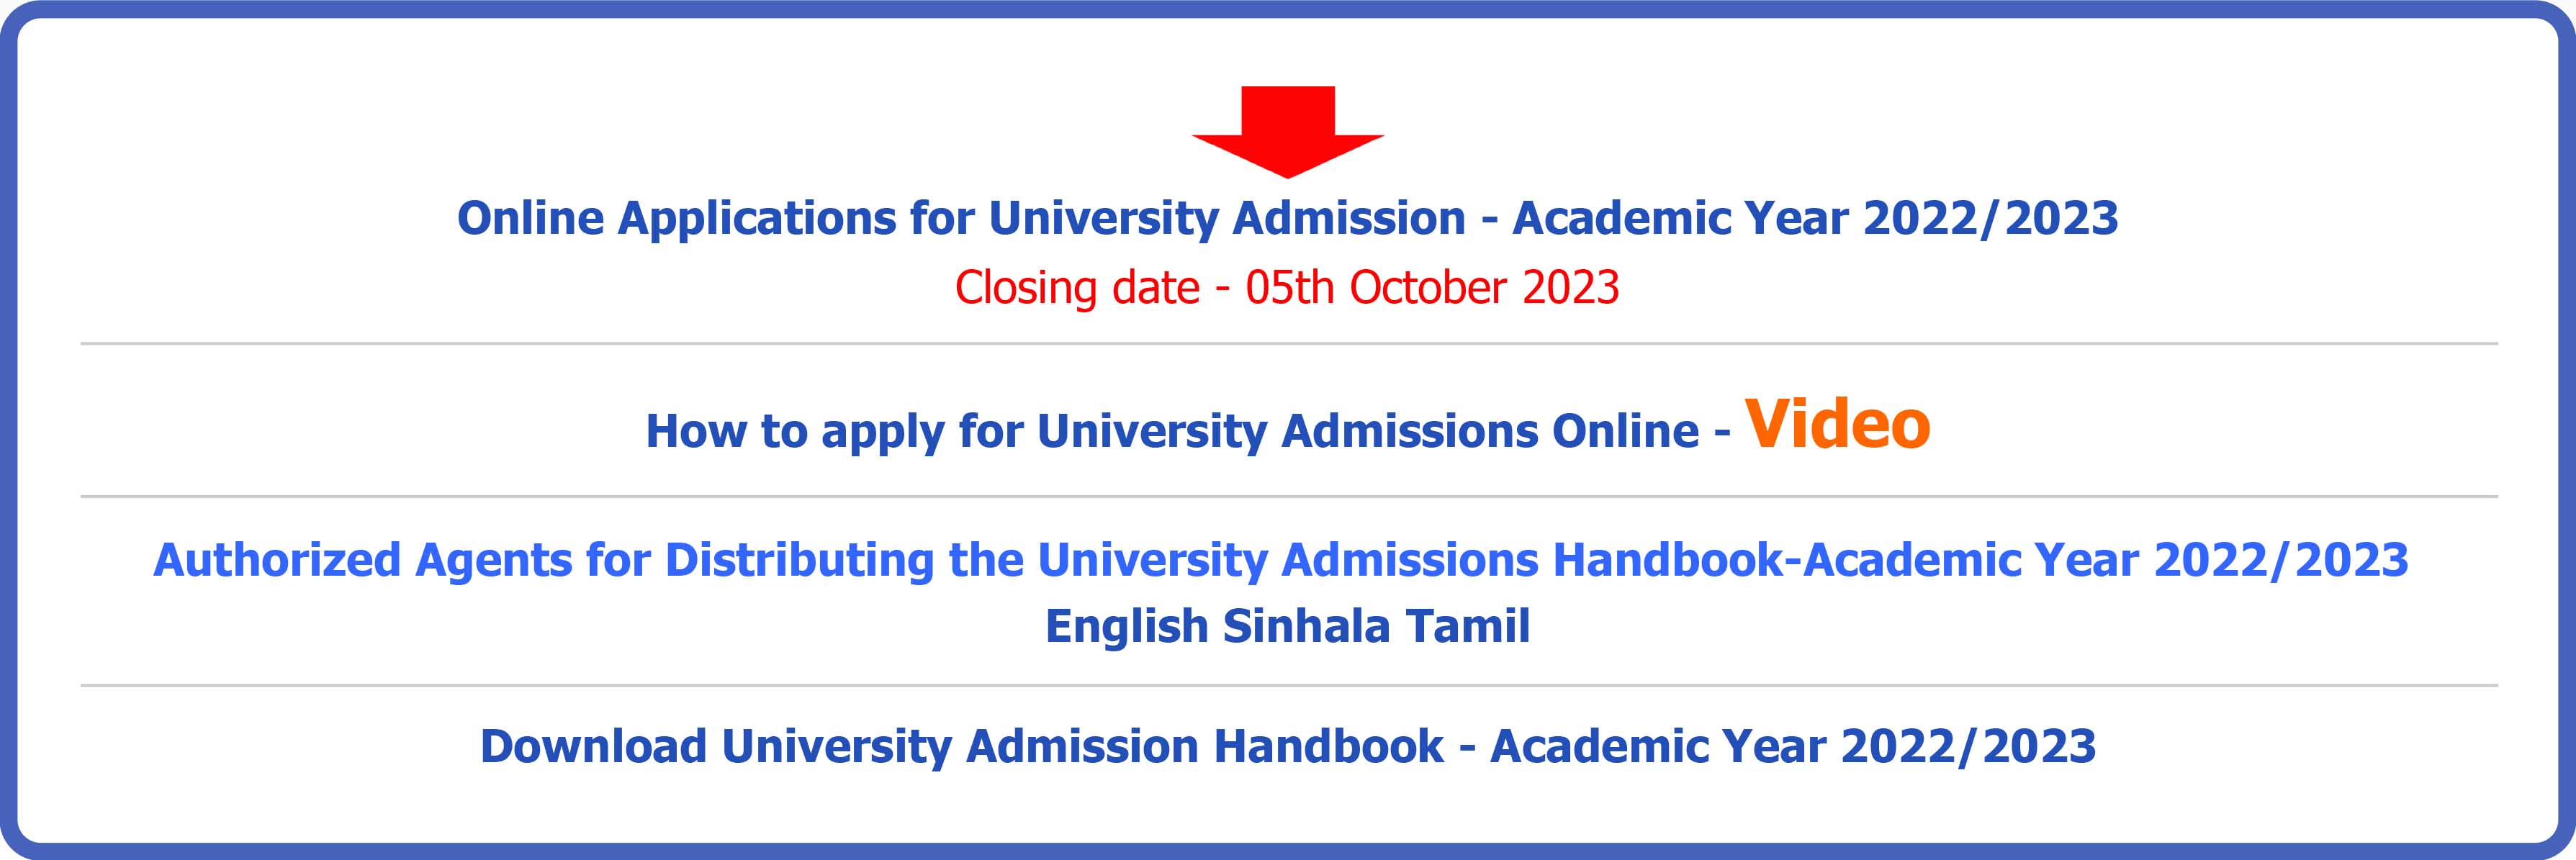 University Admission Application 2023 - UGC Sri Lanka